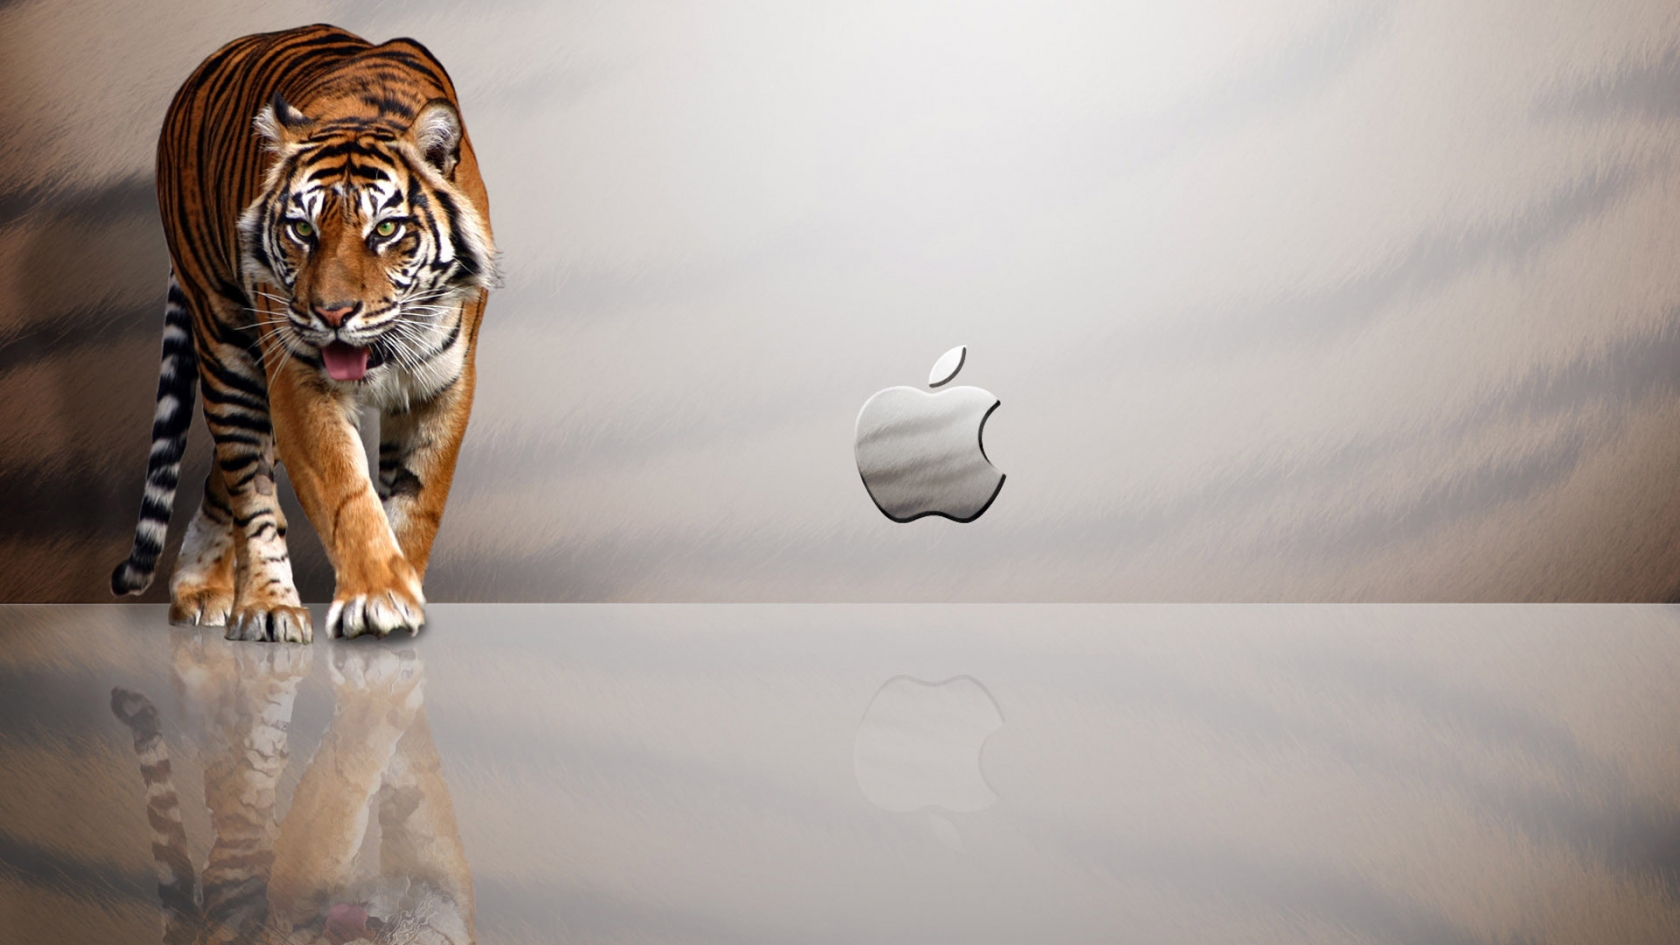 Tiger Apple for 1680 x 945 HDTV resolution